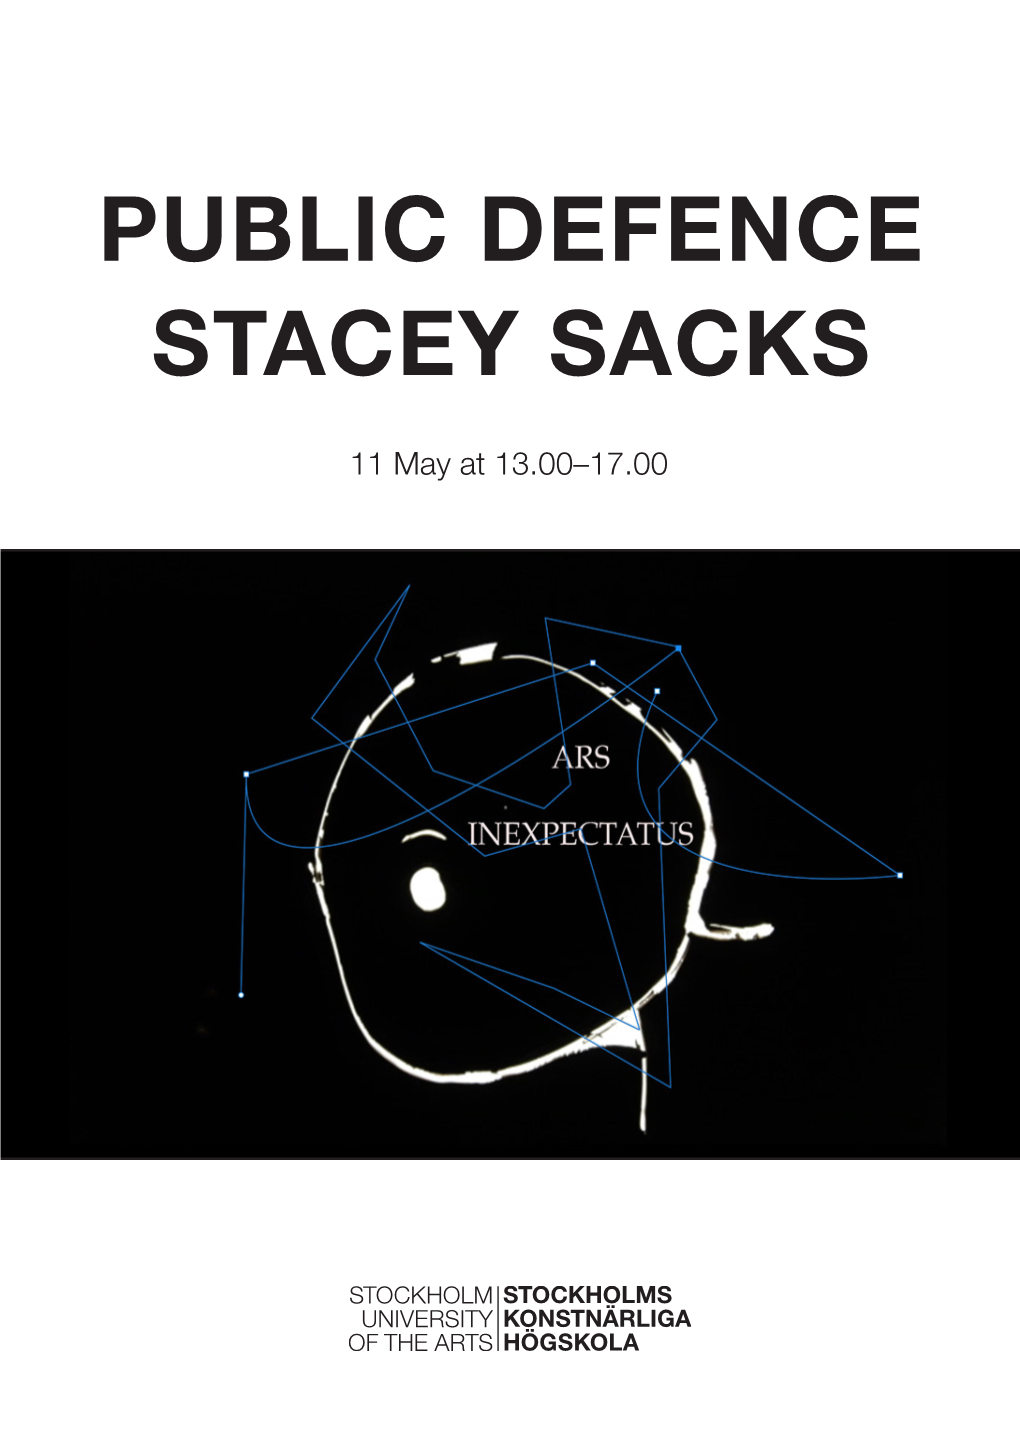 Public Defence Stacey Sacks